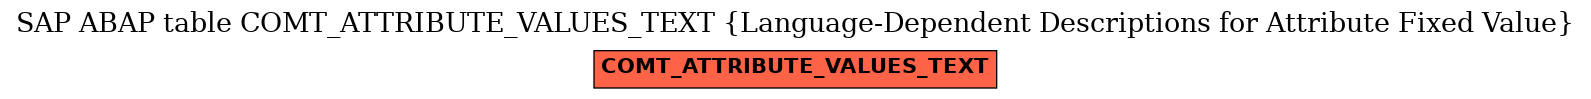 E-R Diagram for table COMT_ATTRIBUTE_VALUES_TEXT (Language-Dependent Descriptions for Attribute Fixed Value)